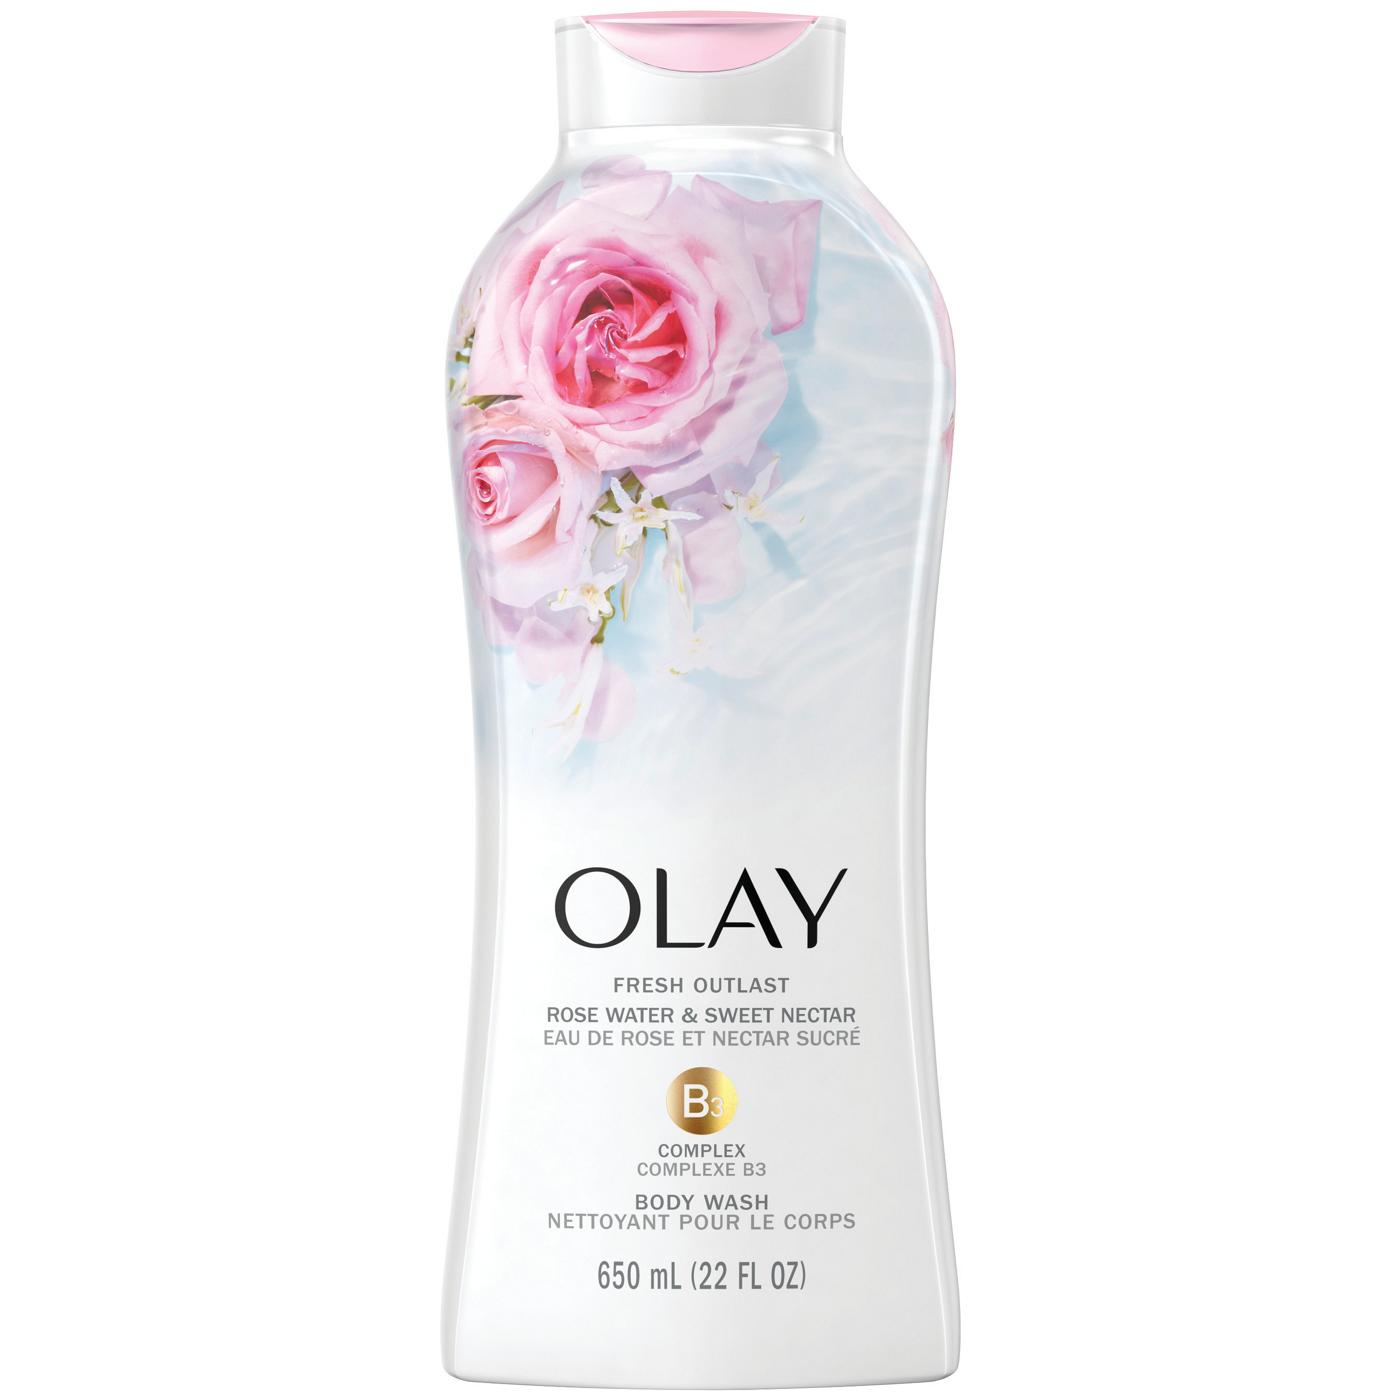 Olay Fresh Outlast Body Wash - Rose Water & Sweet Nectar; image 1 of 3